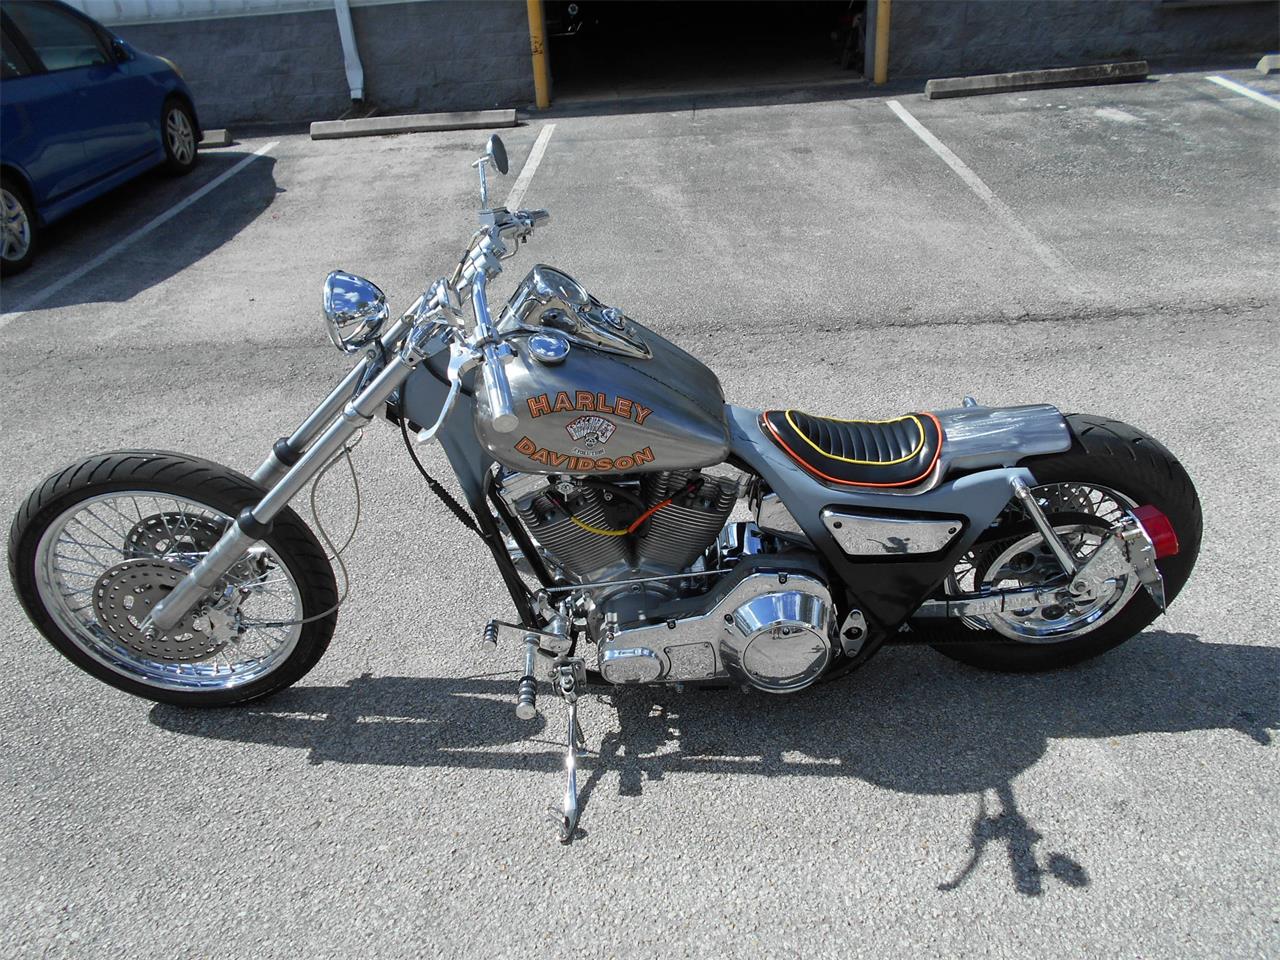 Harley Davidson And The Marlboro Man Motorcycle For Sale Off 72 Medpharmres Com